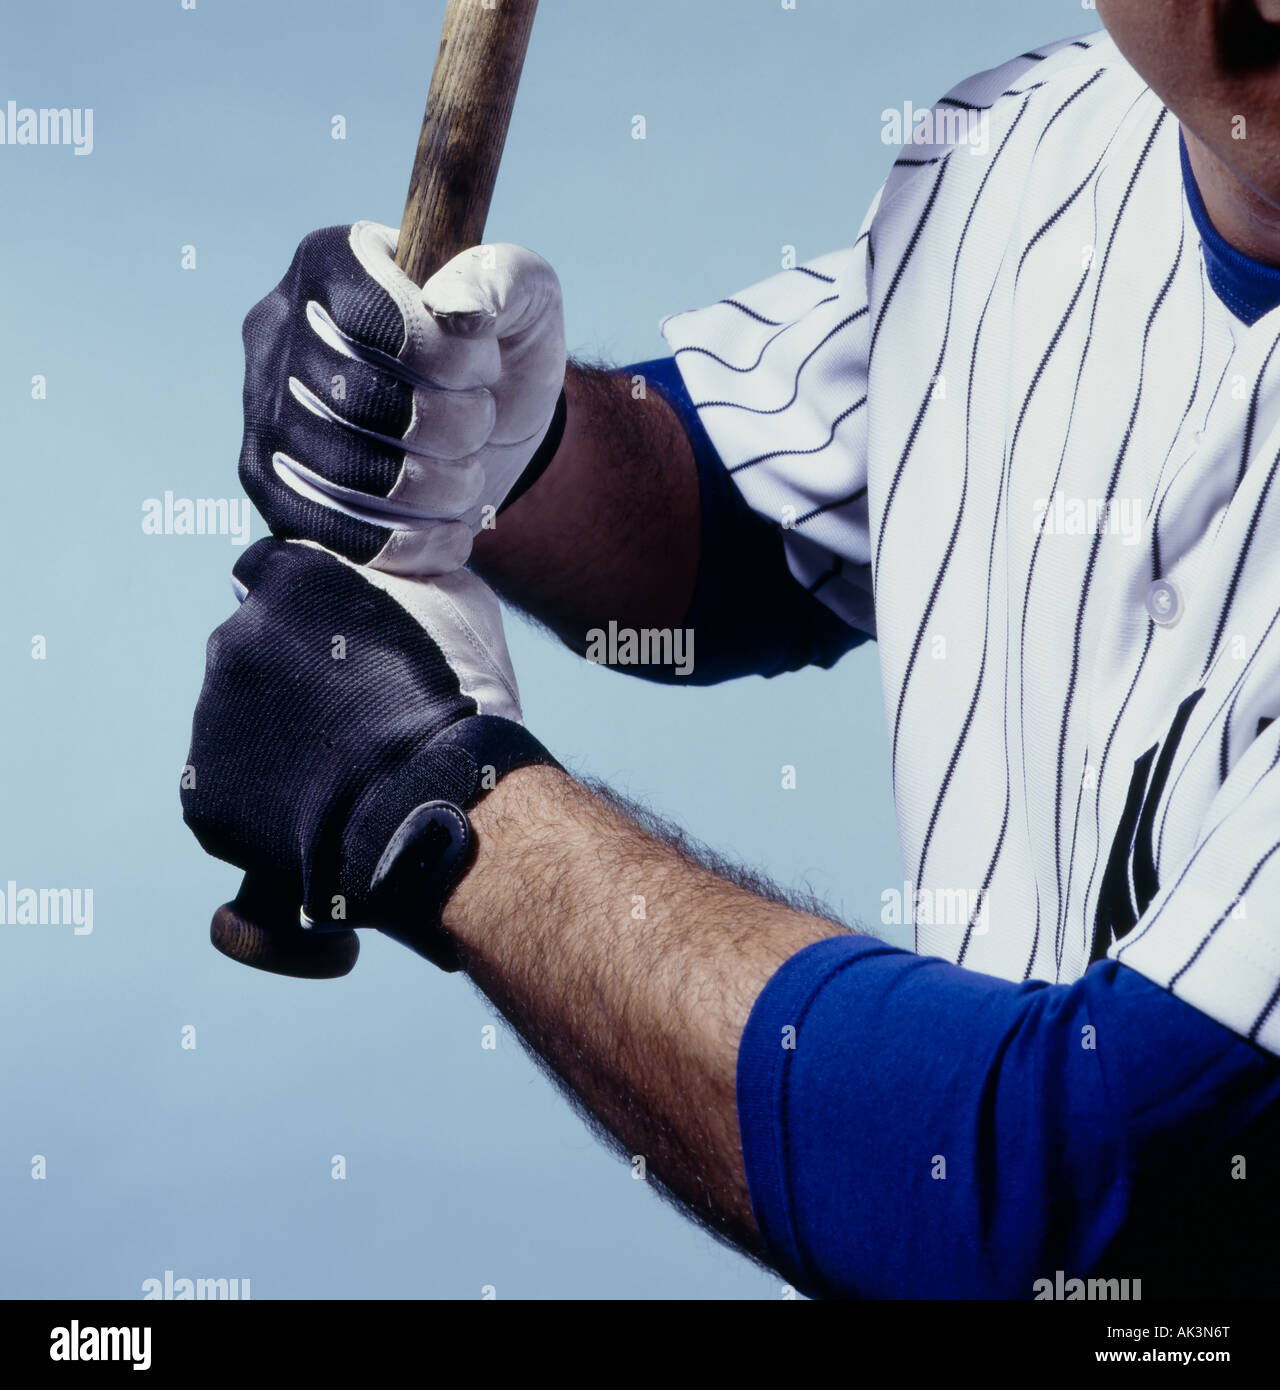 baseball player gripping  bat Stock Photo